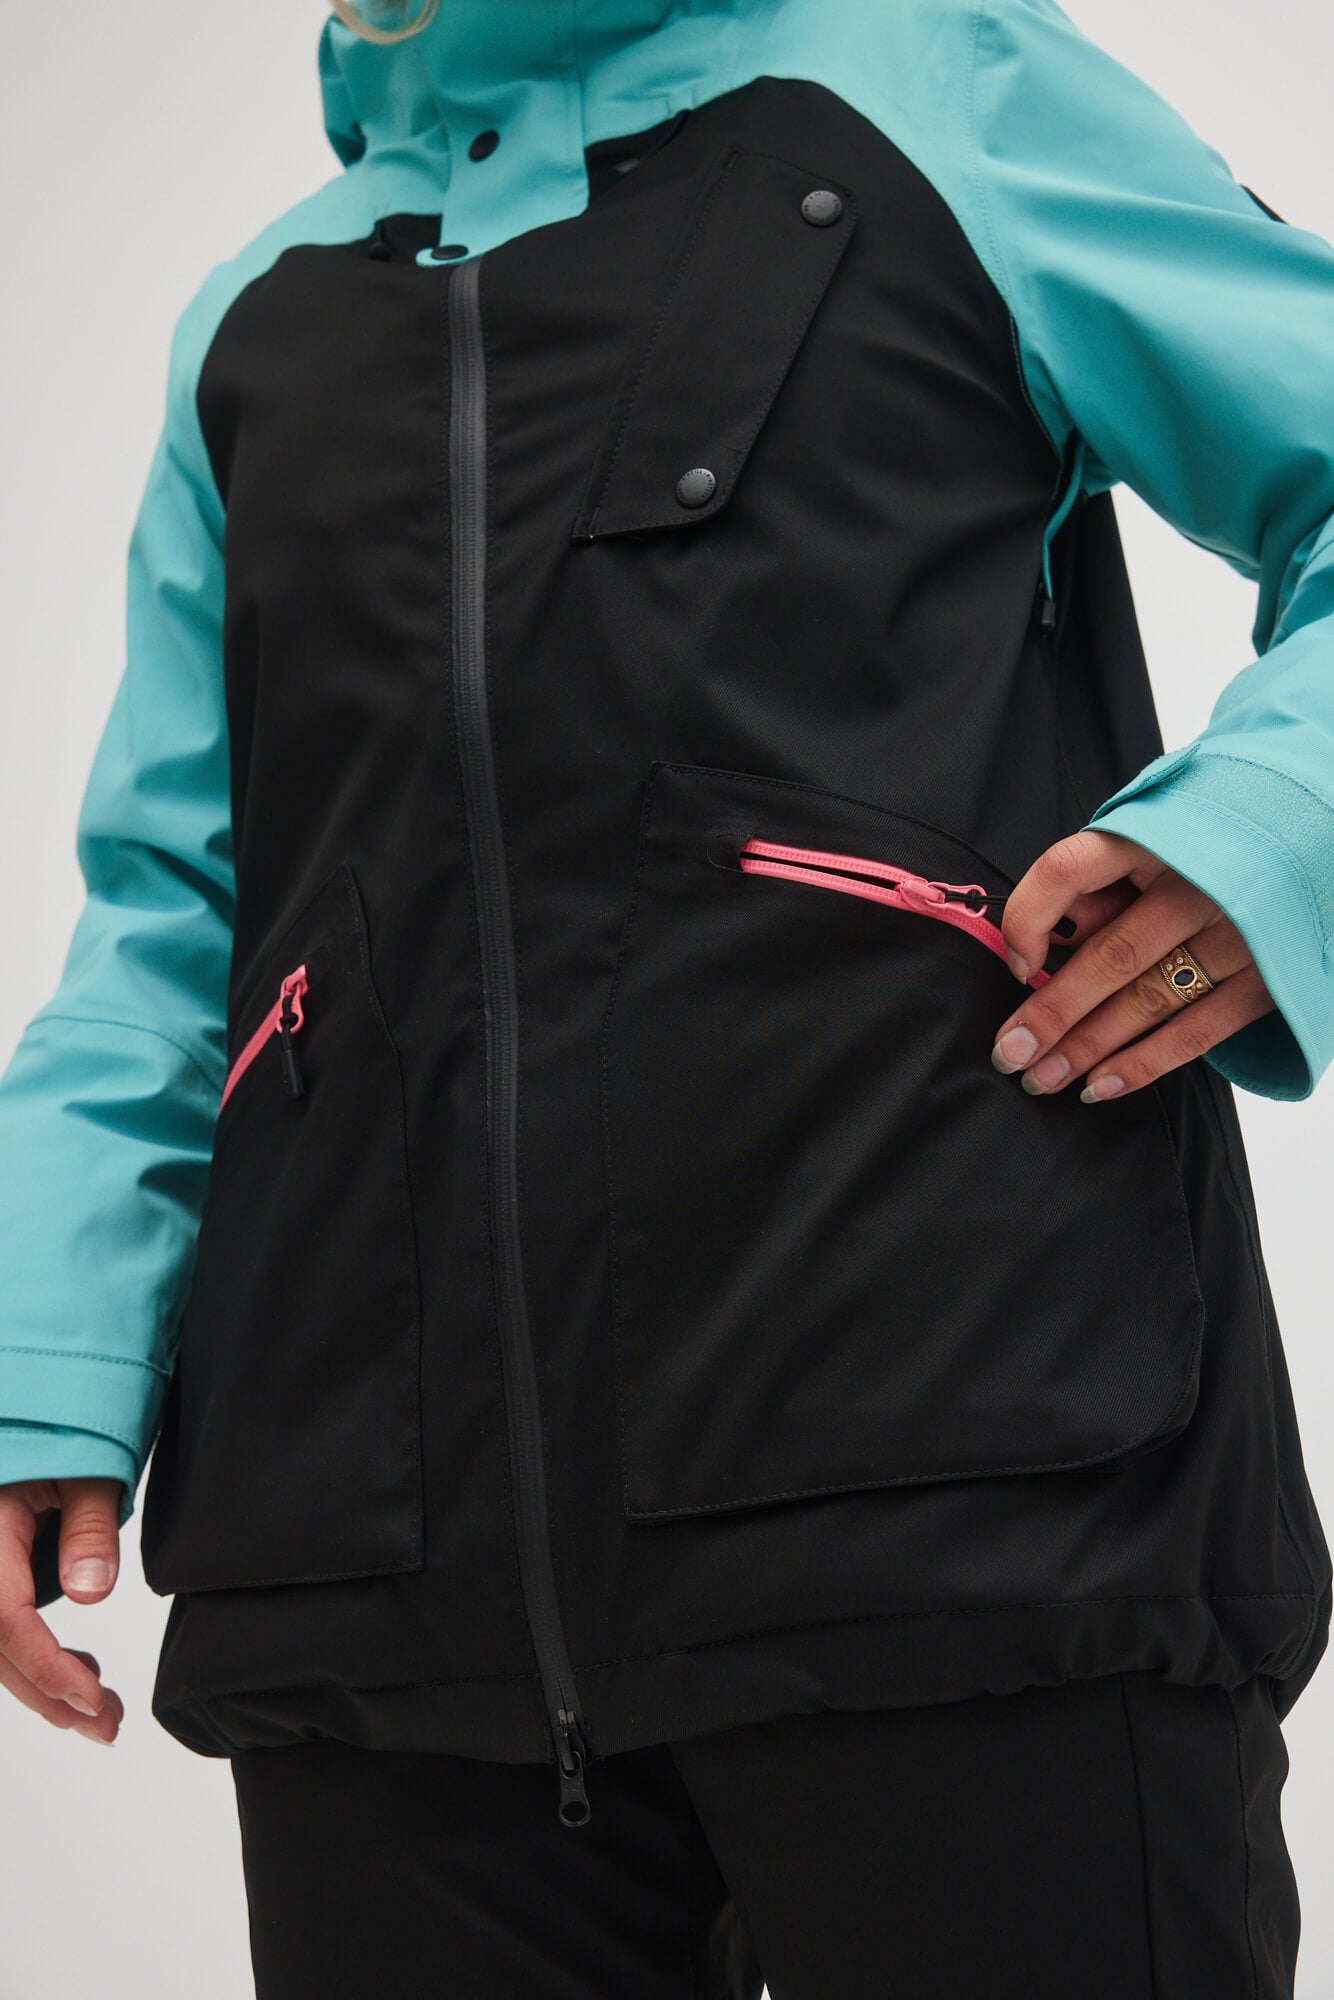 Women's Ametrine Snow Jacket - Aqua Sea Colour Block